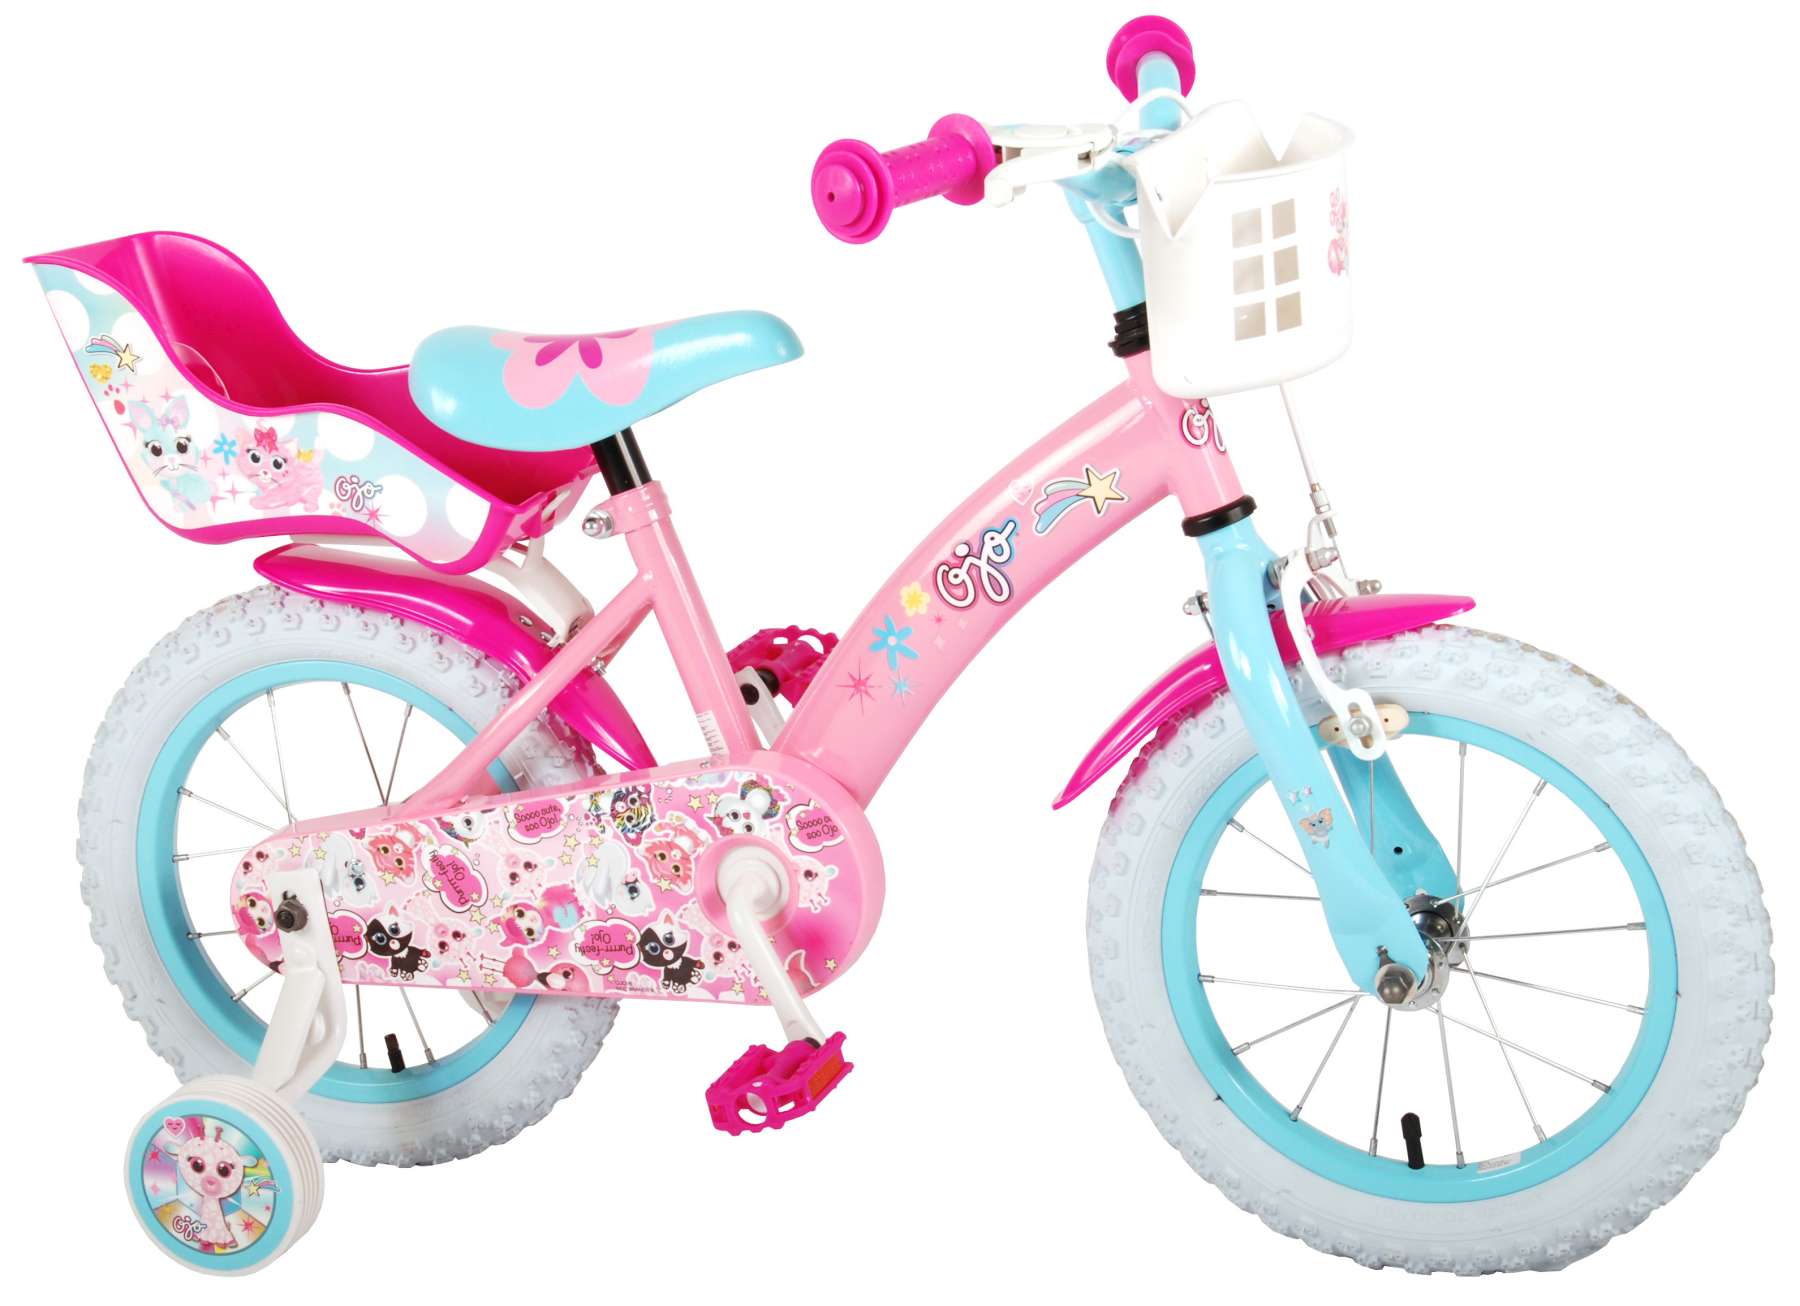 14 inch bike for girl